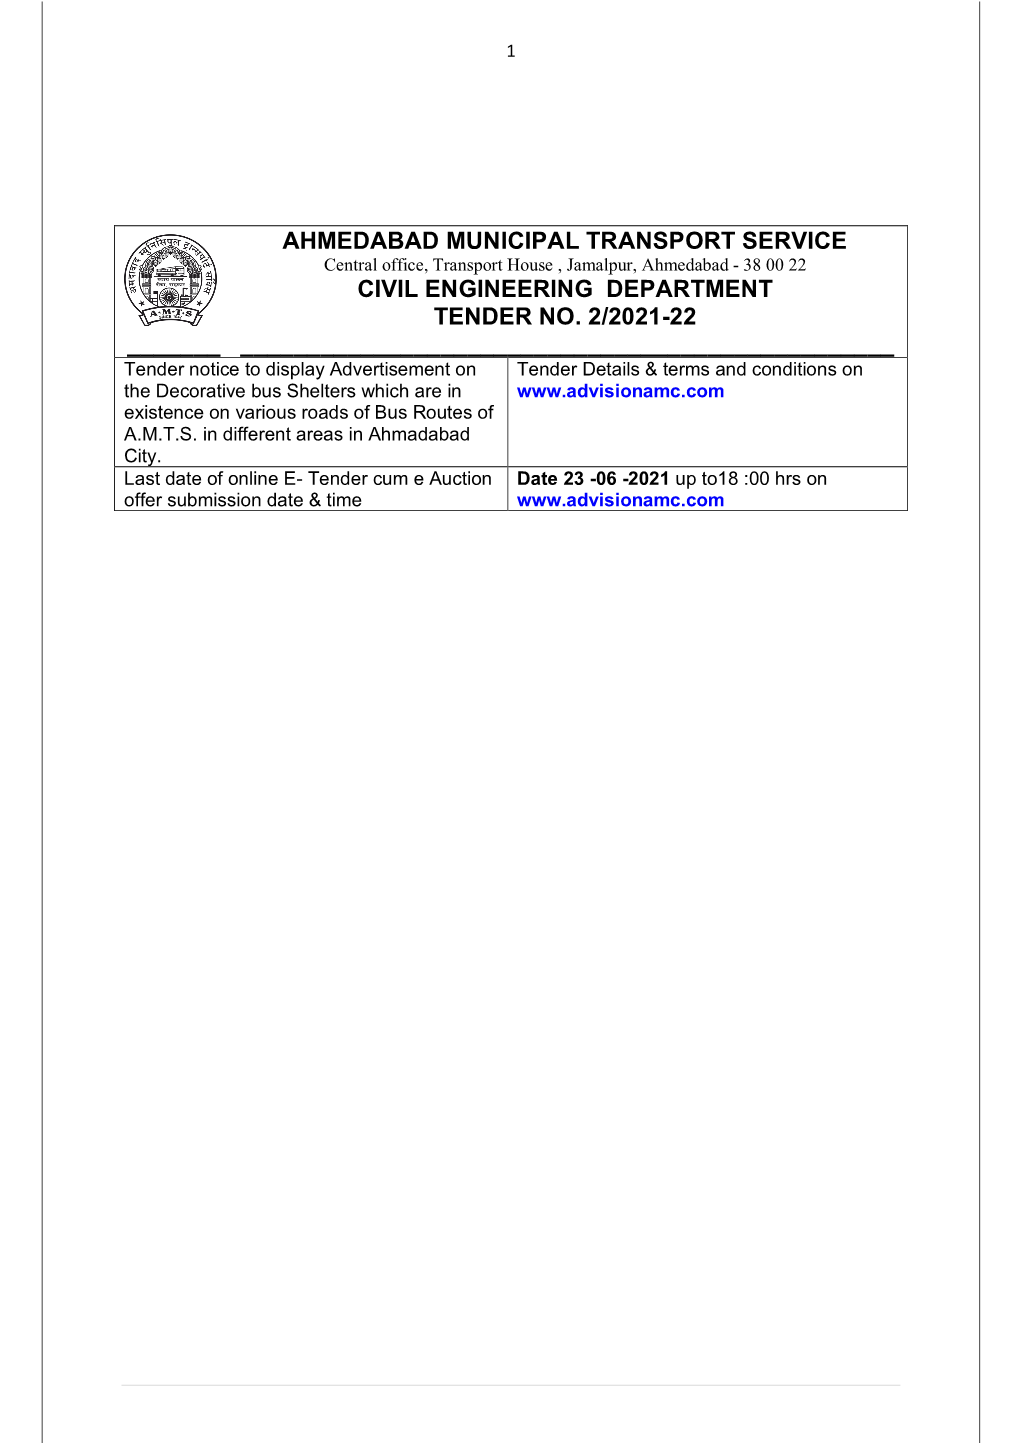 Ahmedabad Municipal Transport Service Civil Engineering Department Tender No. 2/2021-22